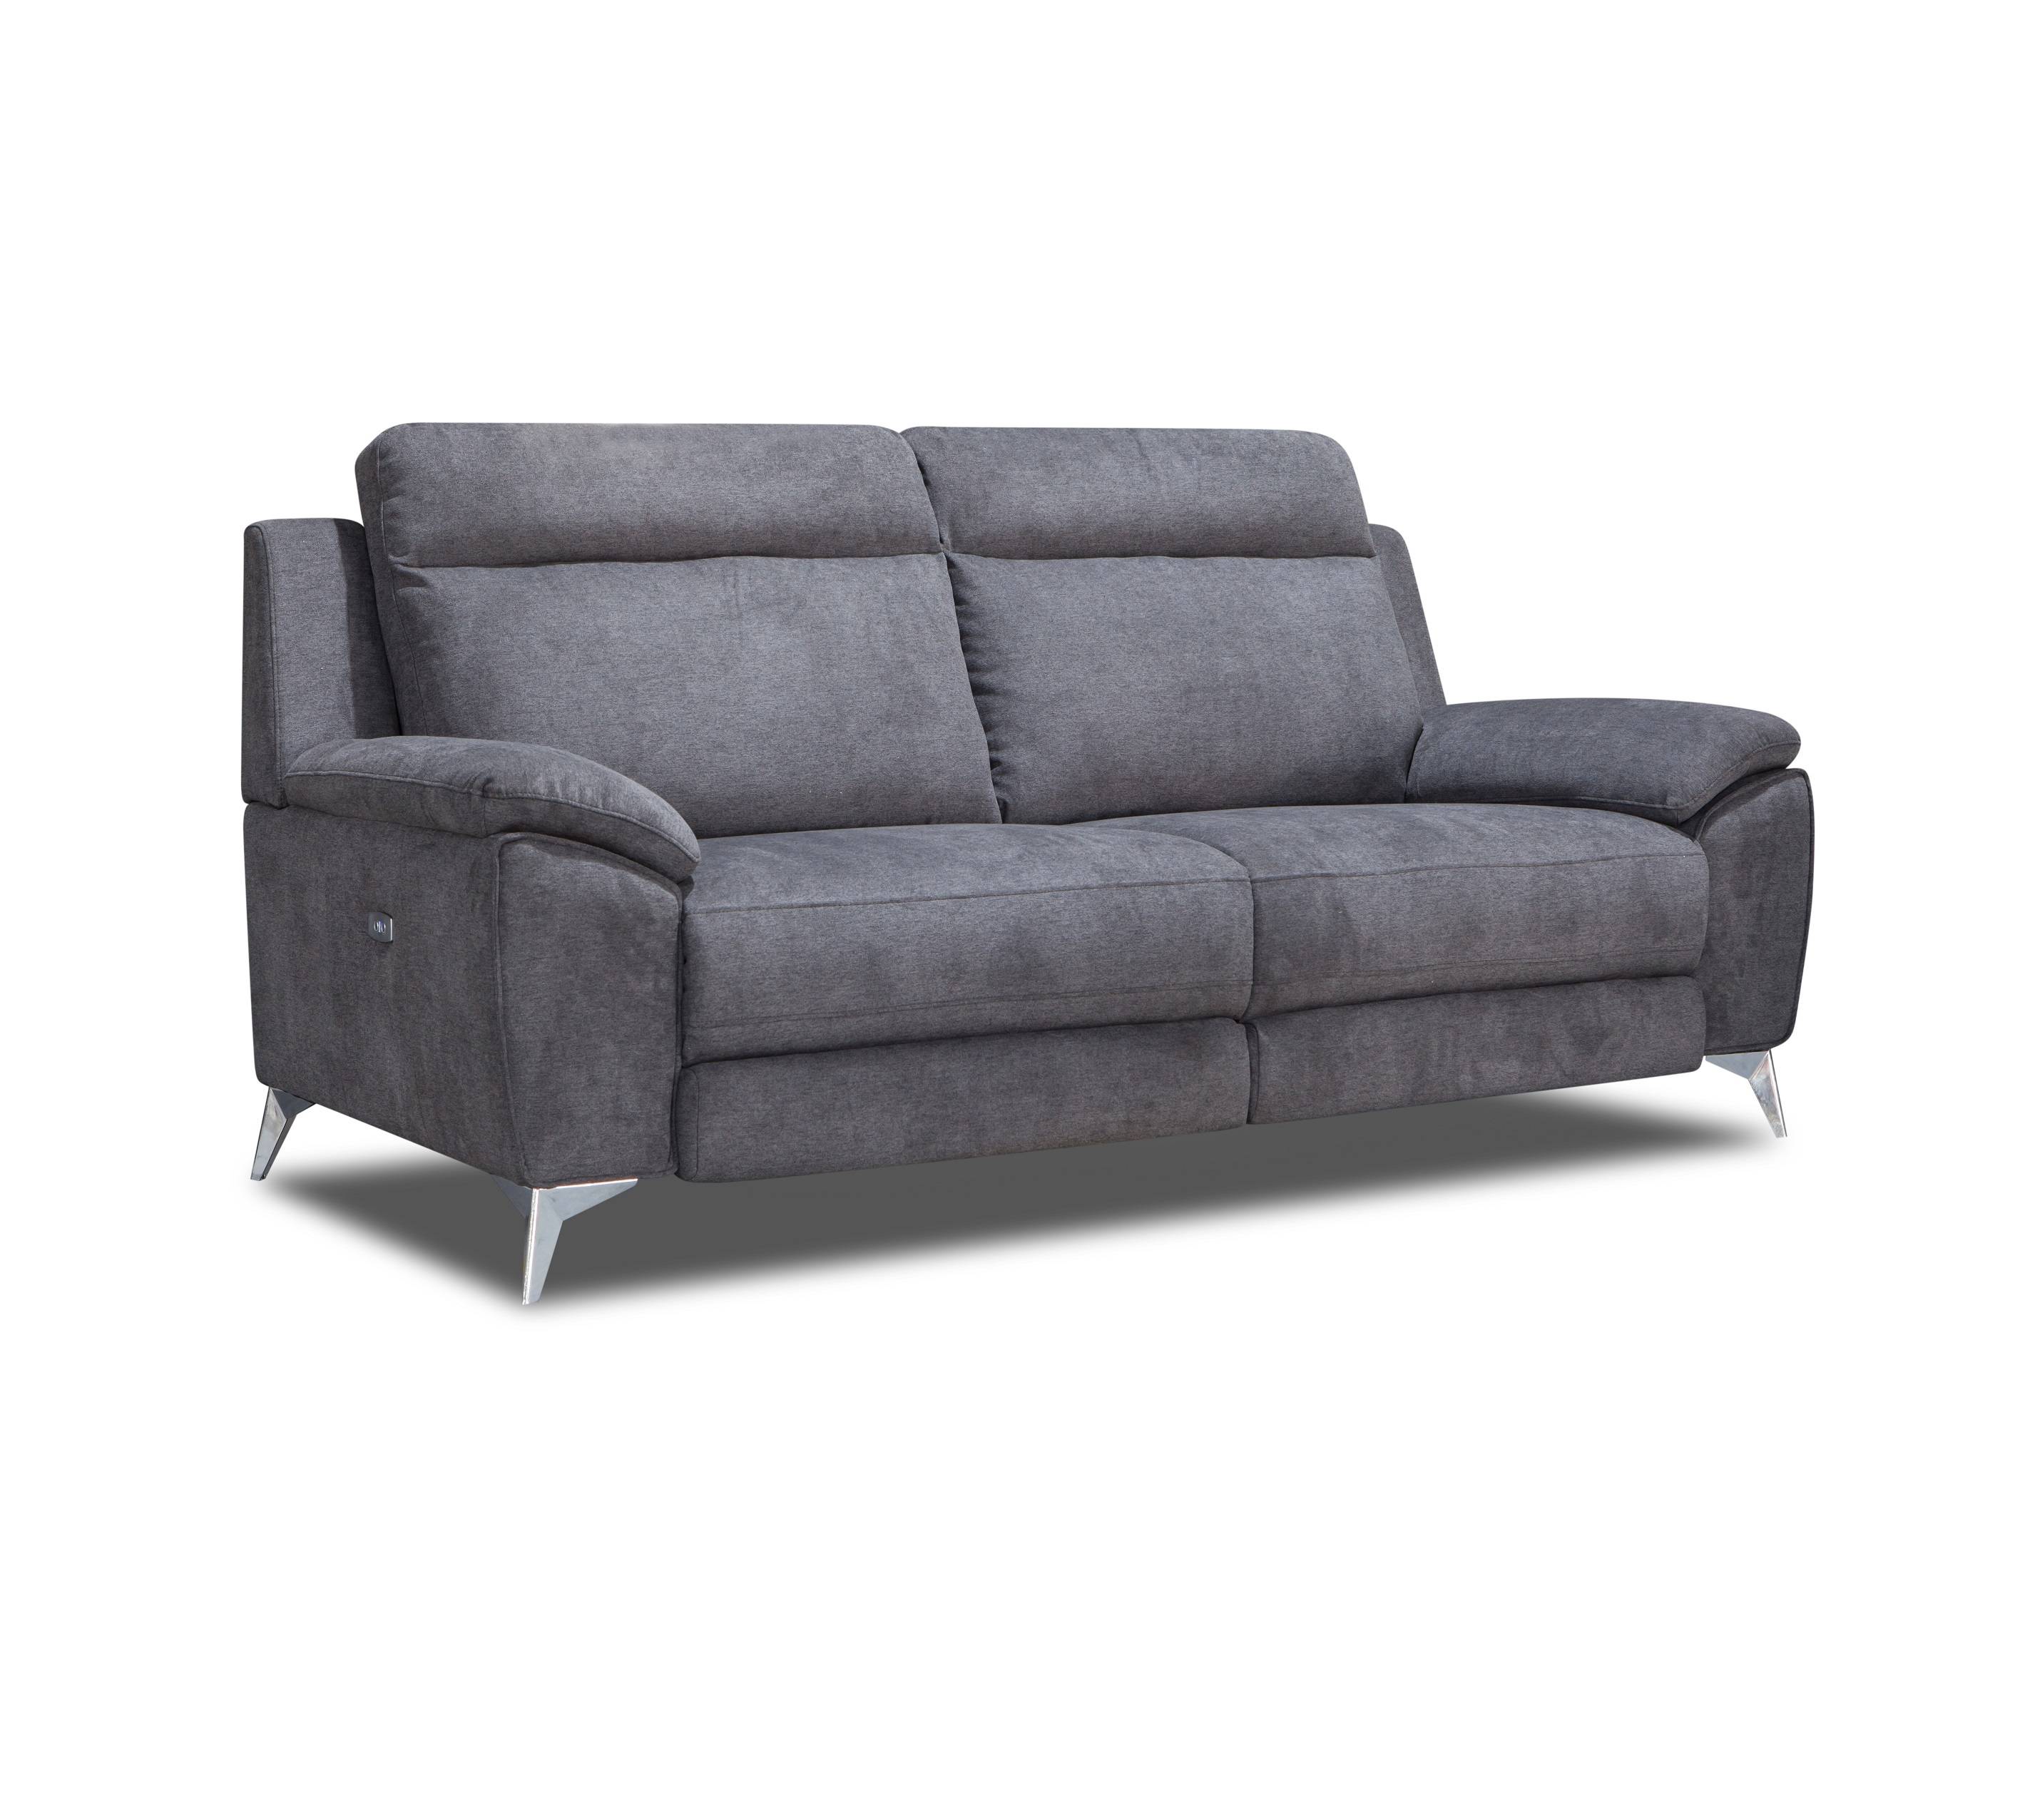 2019 latest modern simple design fabric recliner 2 seater sofa